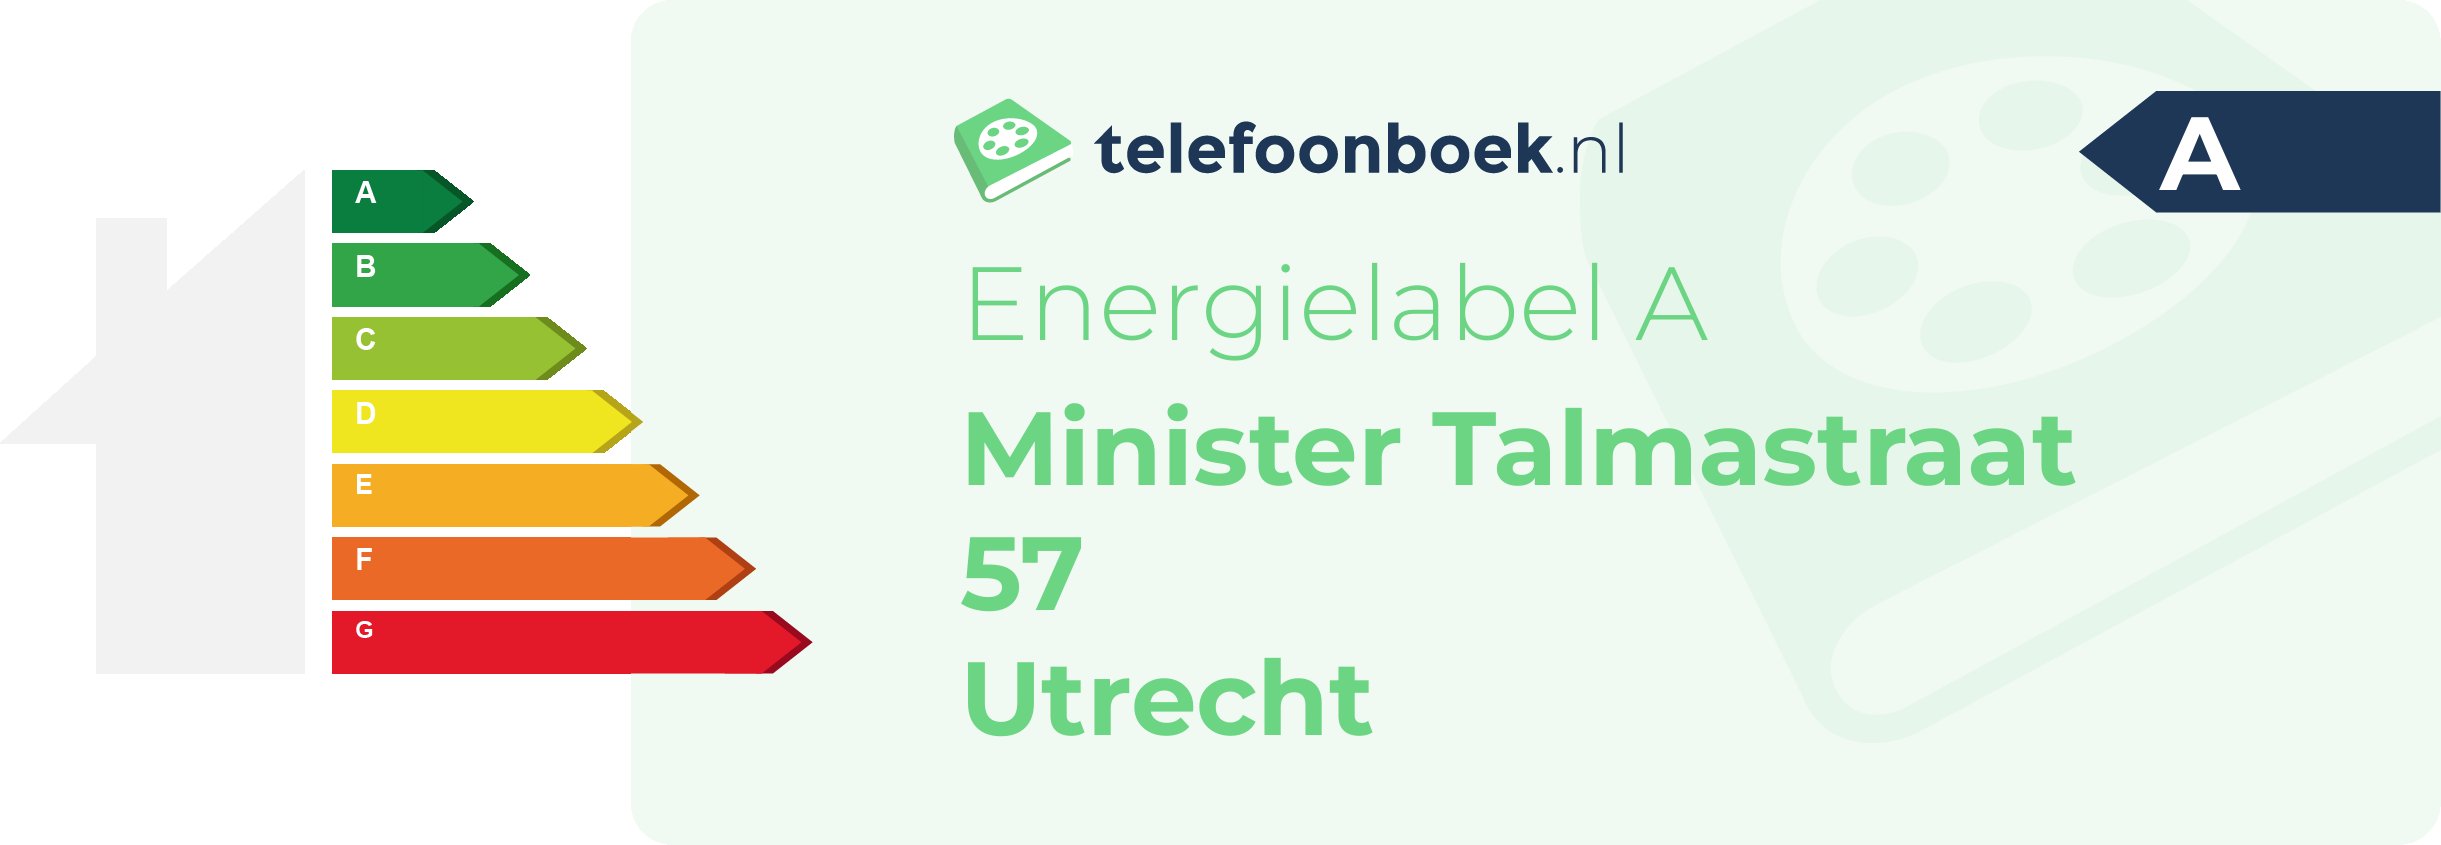 Energielabel Minister Talmastraat 57 Utrecht